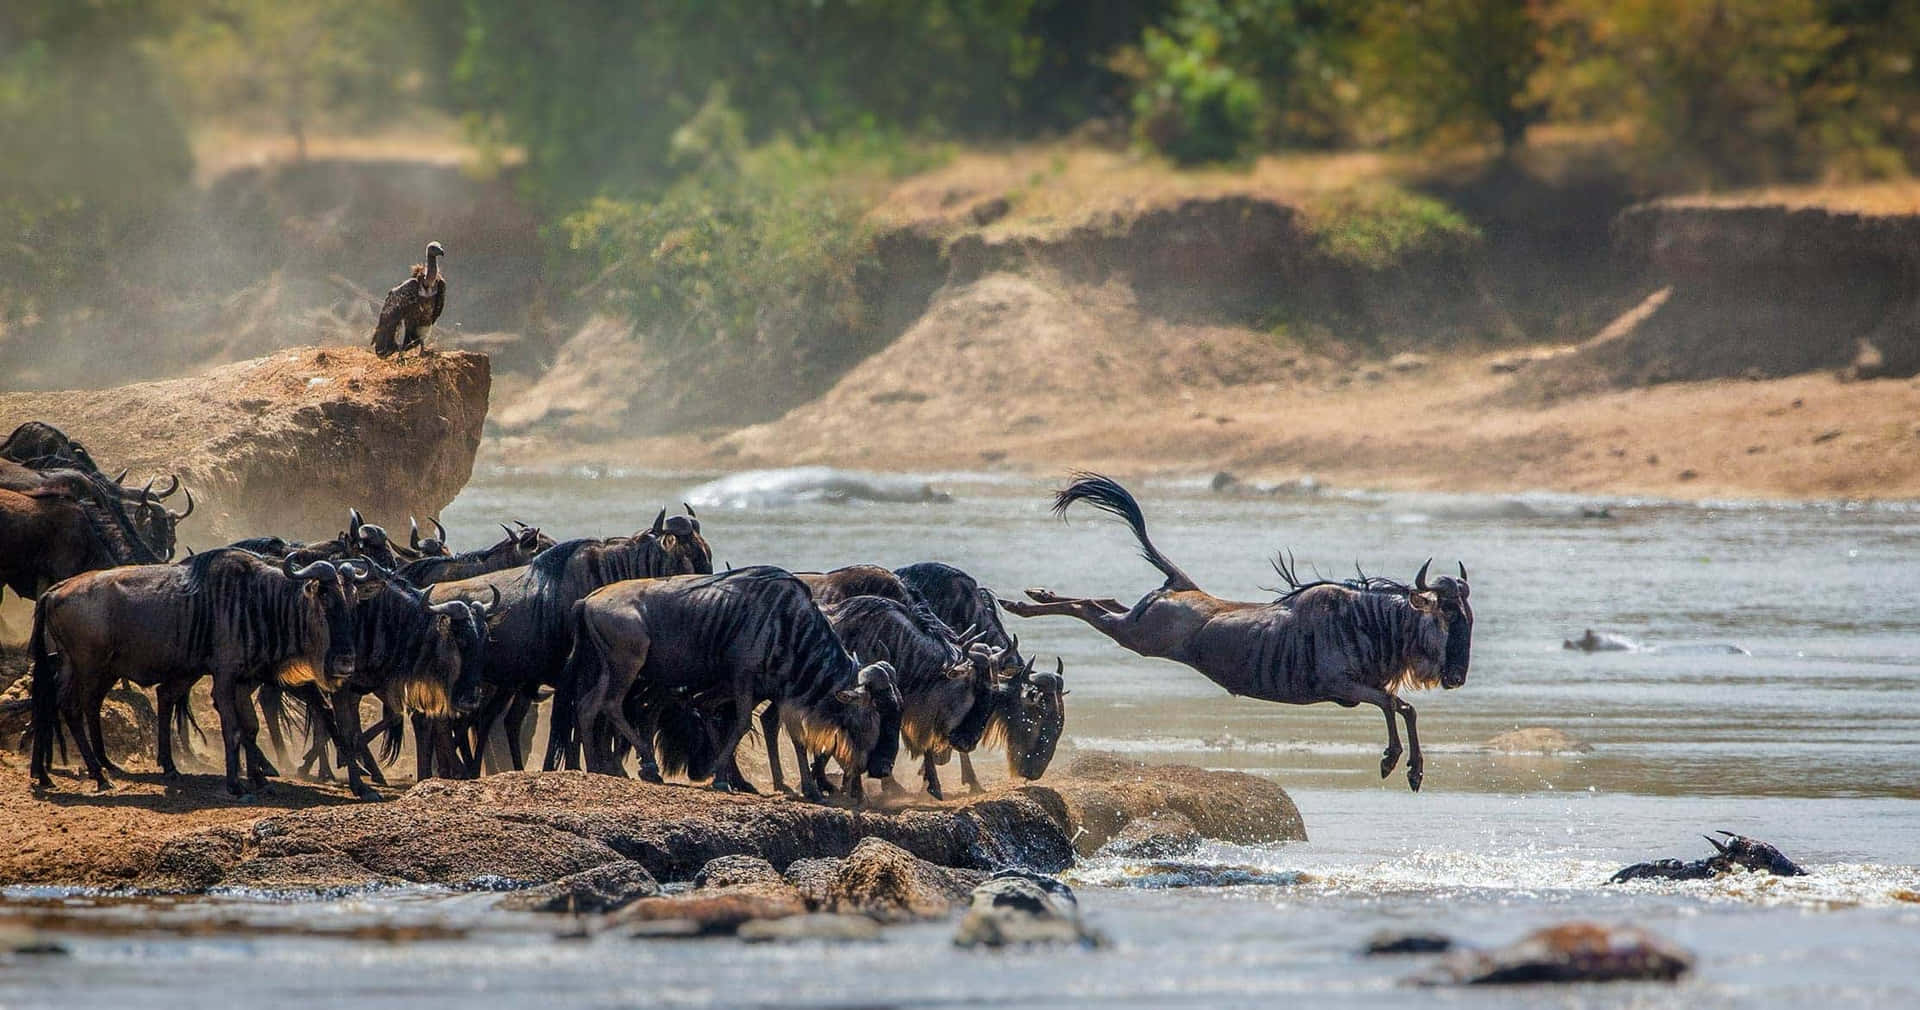 Serengeti National Park Wildebeests Crossing River Wallpaper